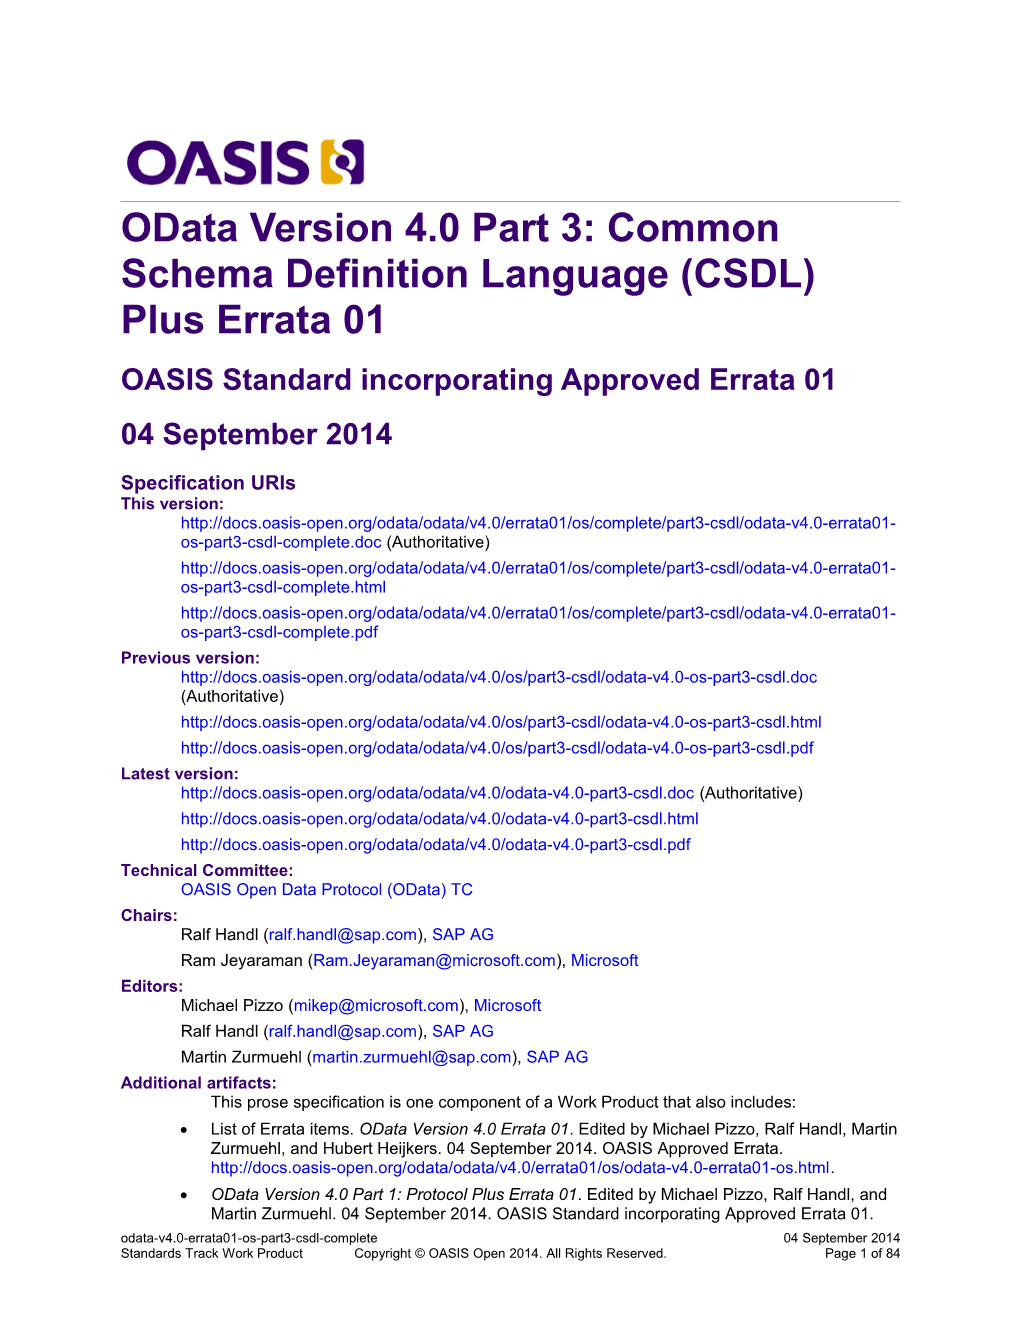 Odata Version 4.0 Part 3: Common Schema Definition Language (CSDL) Plus Errata 01